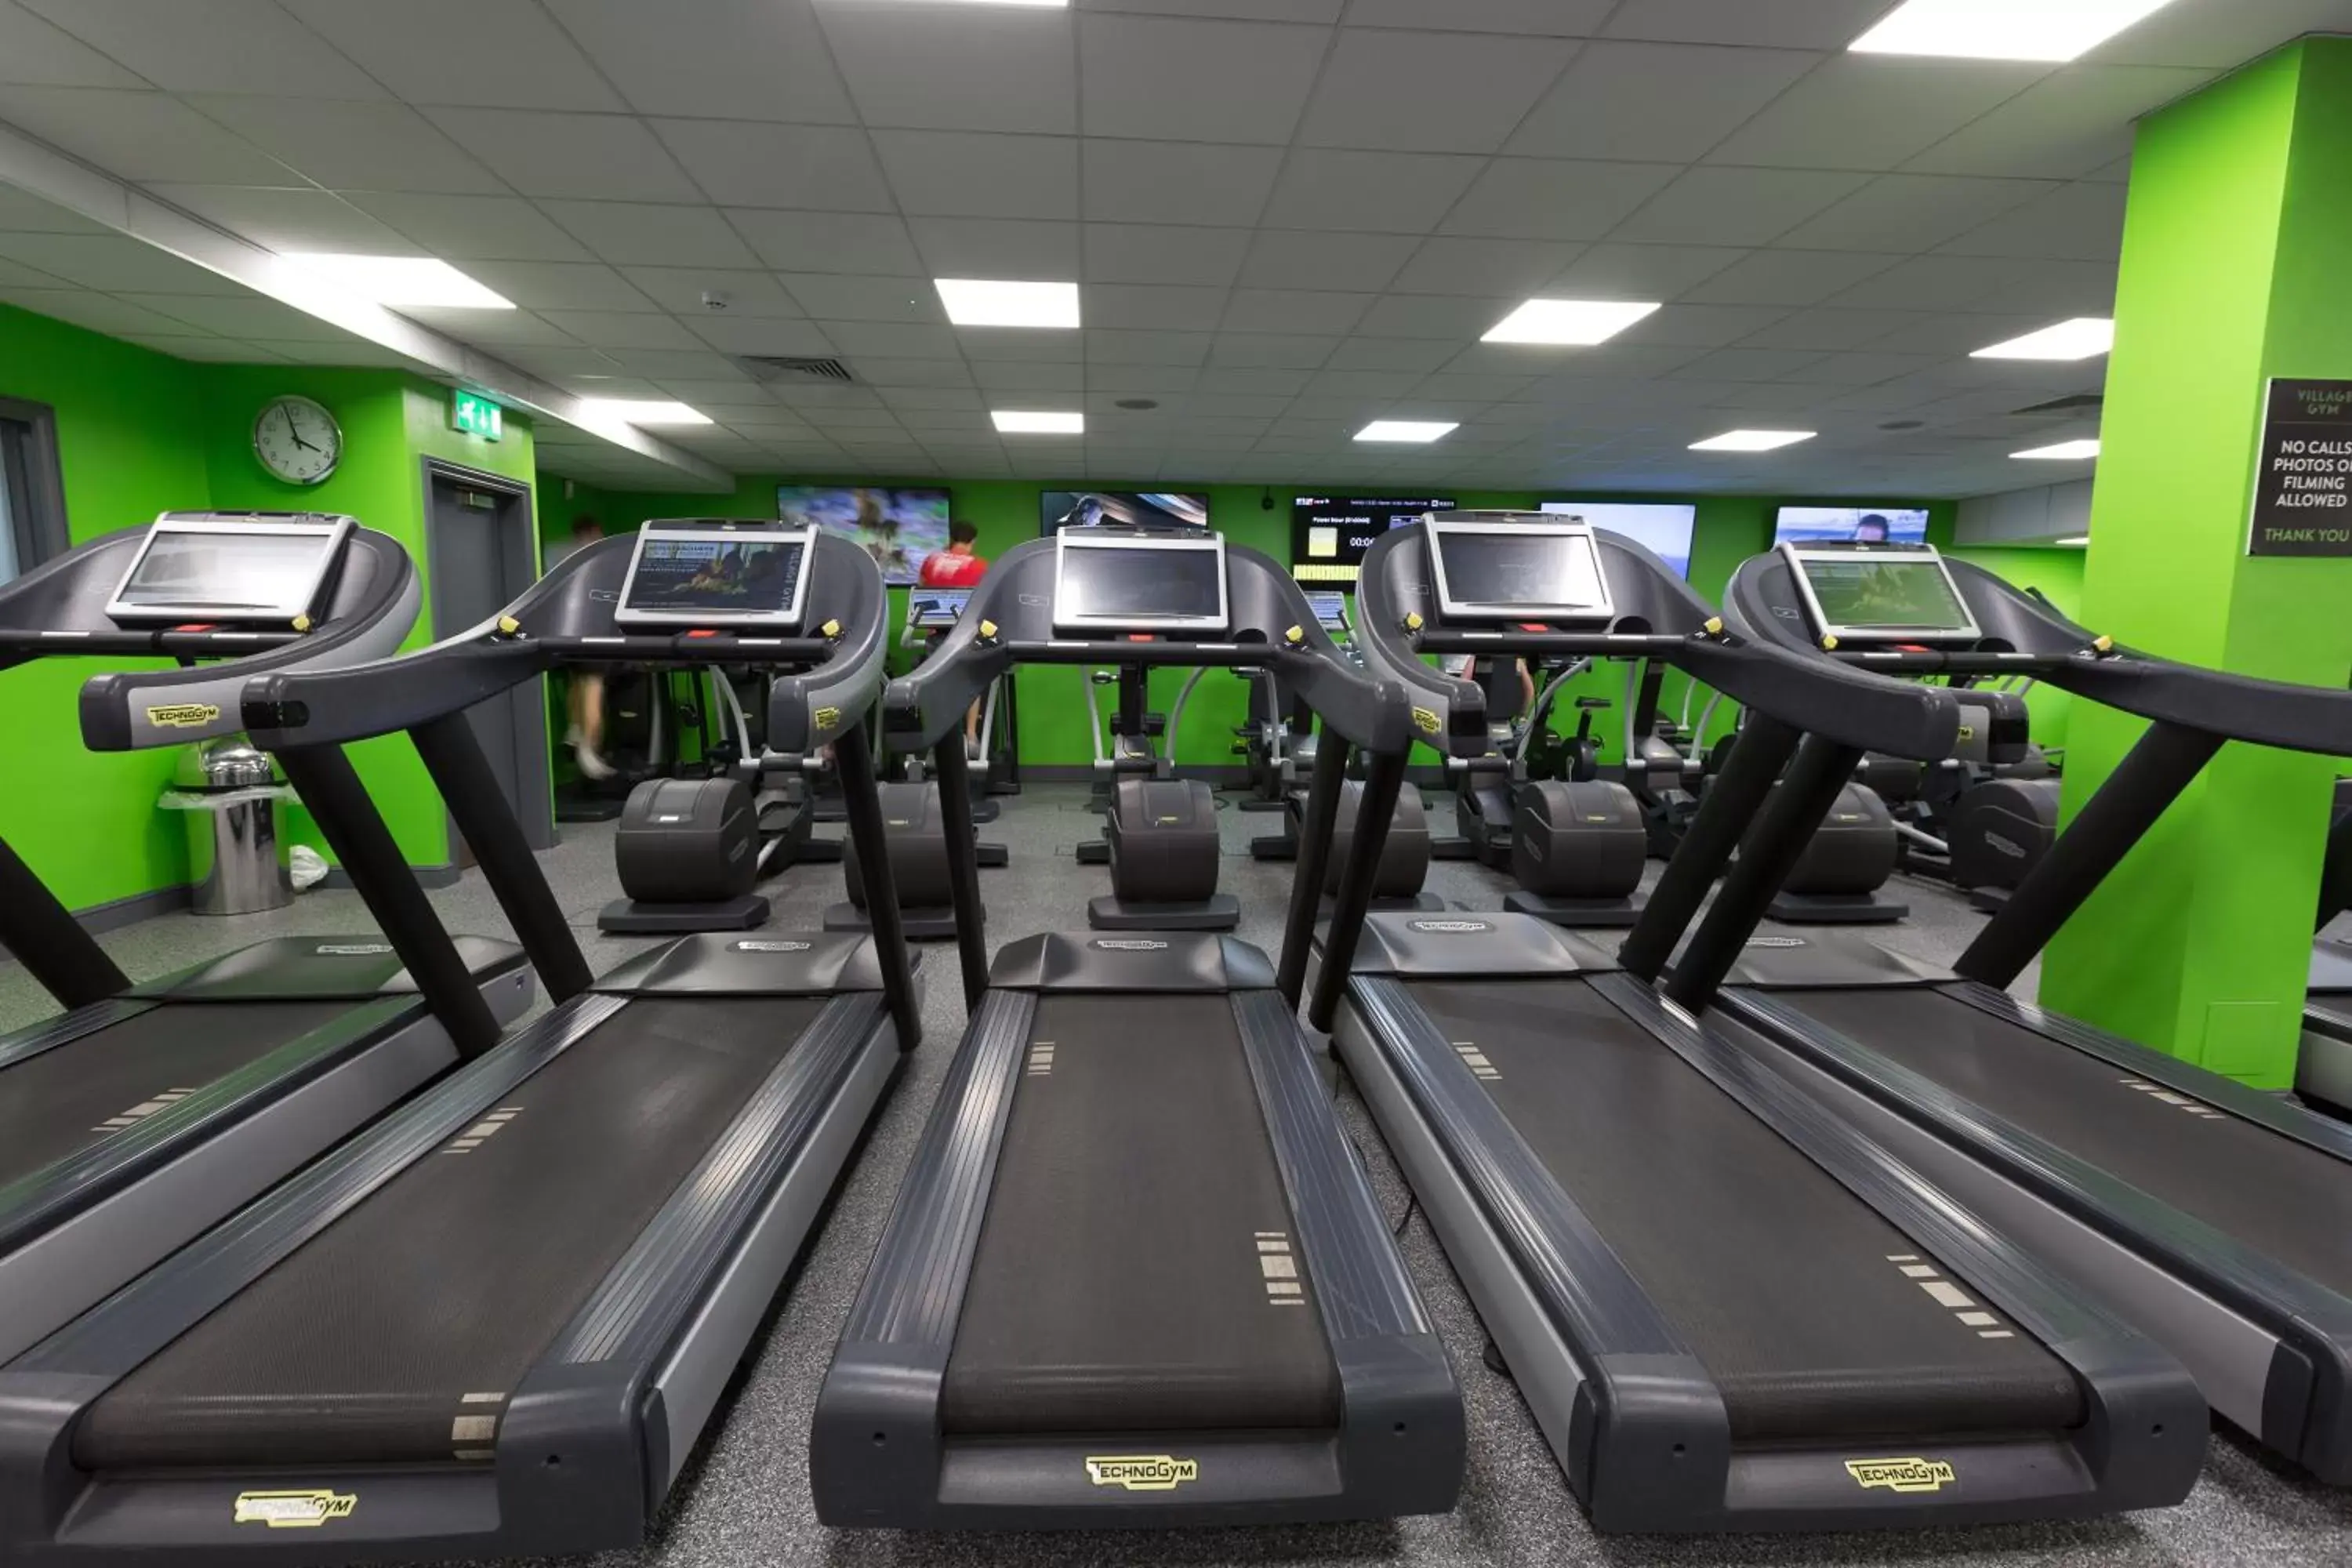 Fitness centre/facilities in Village Hotel Birmingham Dudley